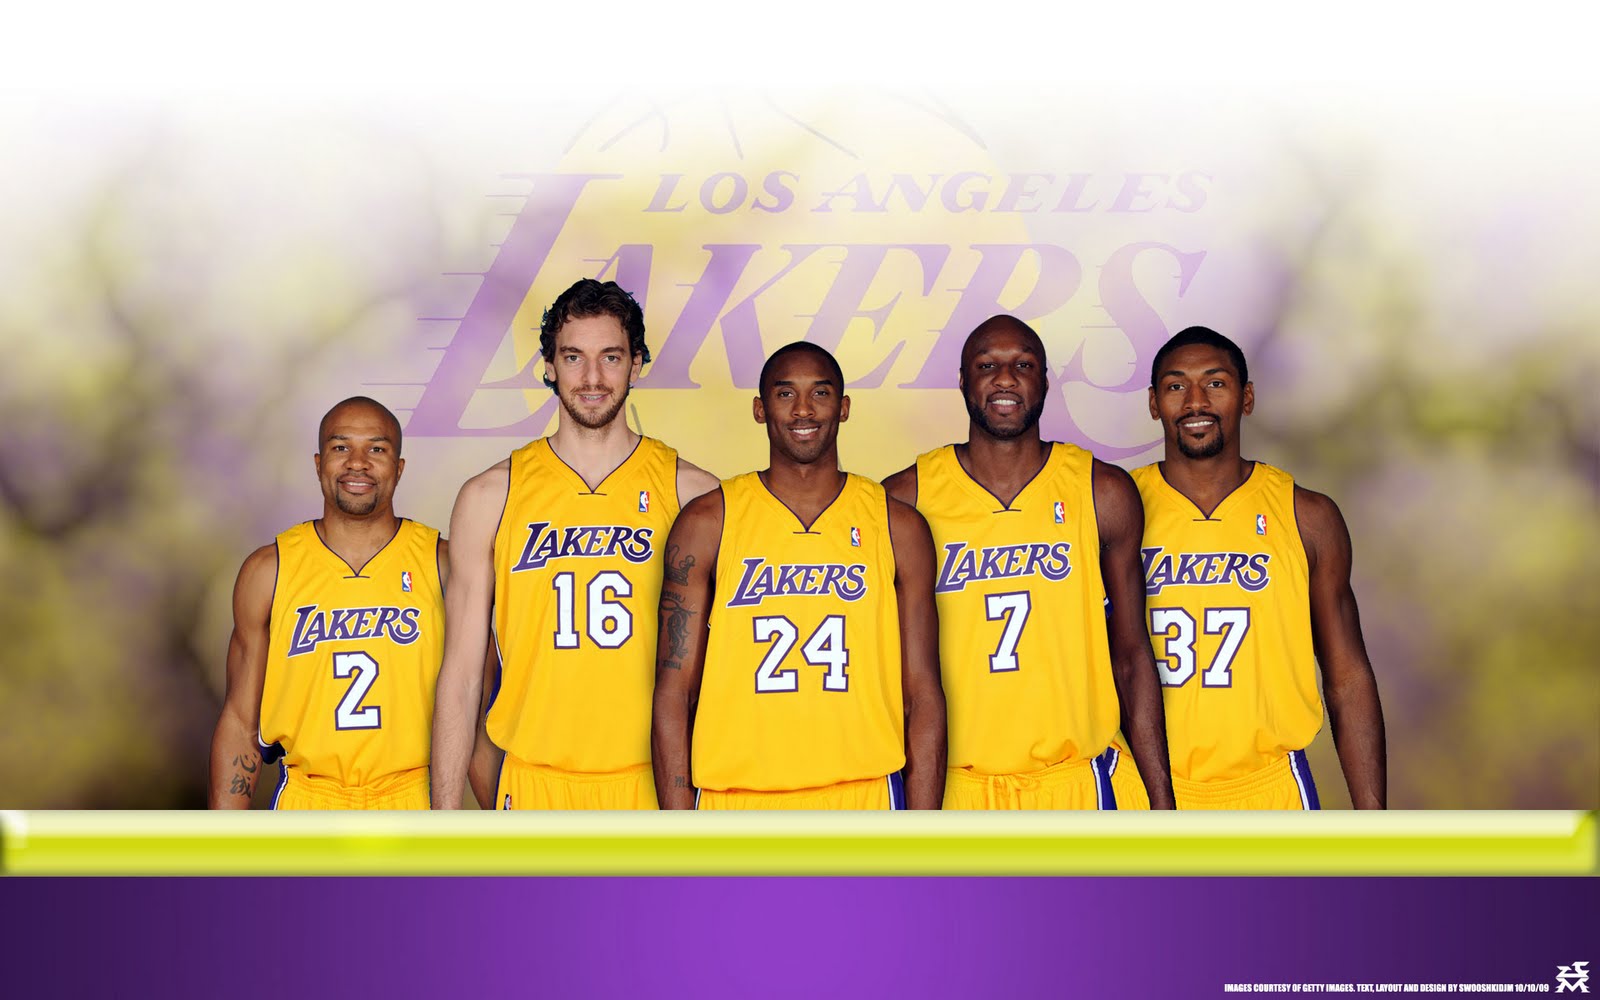 https://blogger.googleusercontent.com/img/b/R29vZ2xl/AVvXsEijpe7kk1daR9UA5hZtoa-7ezCj4WIC8GAnA7mDEWm7KVSVEXfDmKwAiIZK0uGOd7OqafcgPnK8kOcAP5u7lcChyphenhyphenxU1GMxpfgjmrYNnsR2EhyphenhyphenaGNaZXMYcCAZKM2jxeguIDu7U3xGt6uTw0/s1600/LA-Lakers-2010-Starting-Five-Widescreen-Wallpaper.jpg